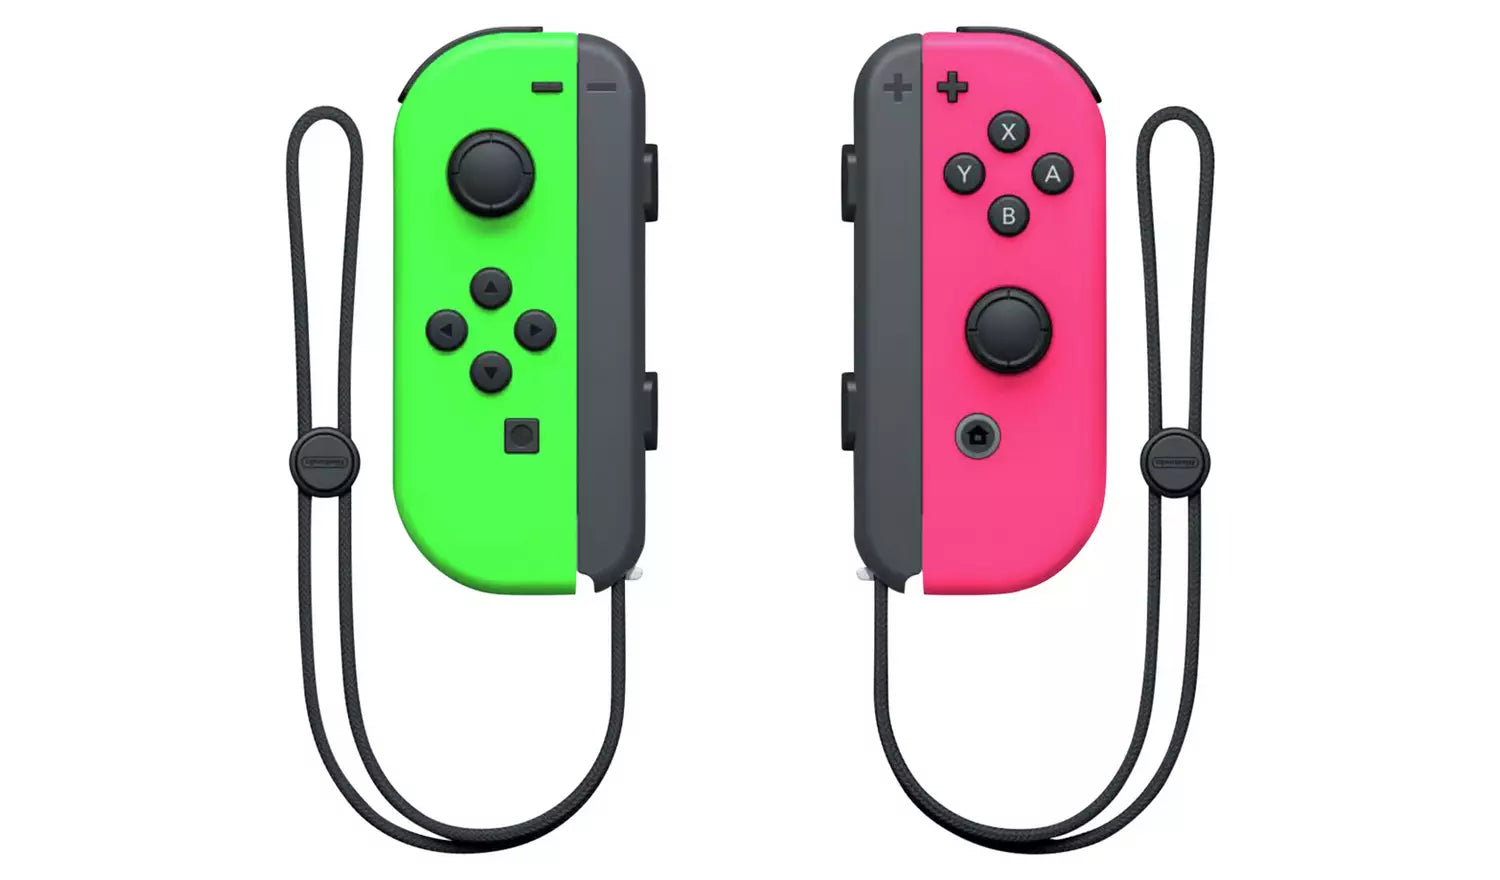 Nintendo Switch Joy-Con Controller Pair - Neon Green & Pink